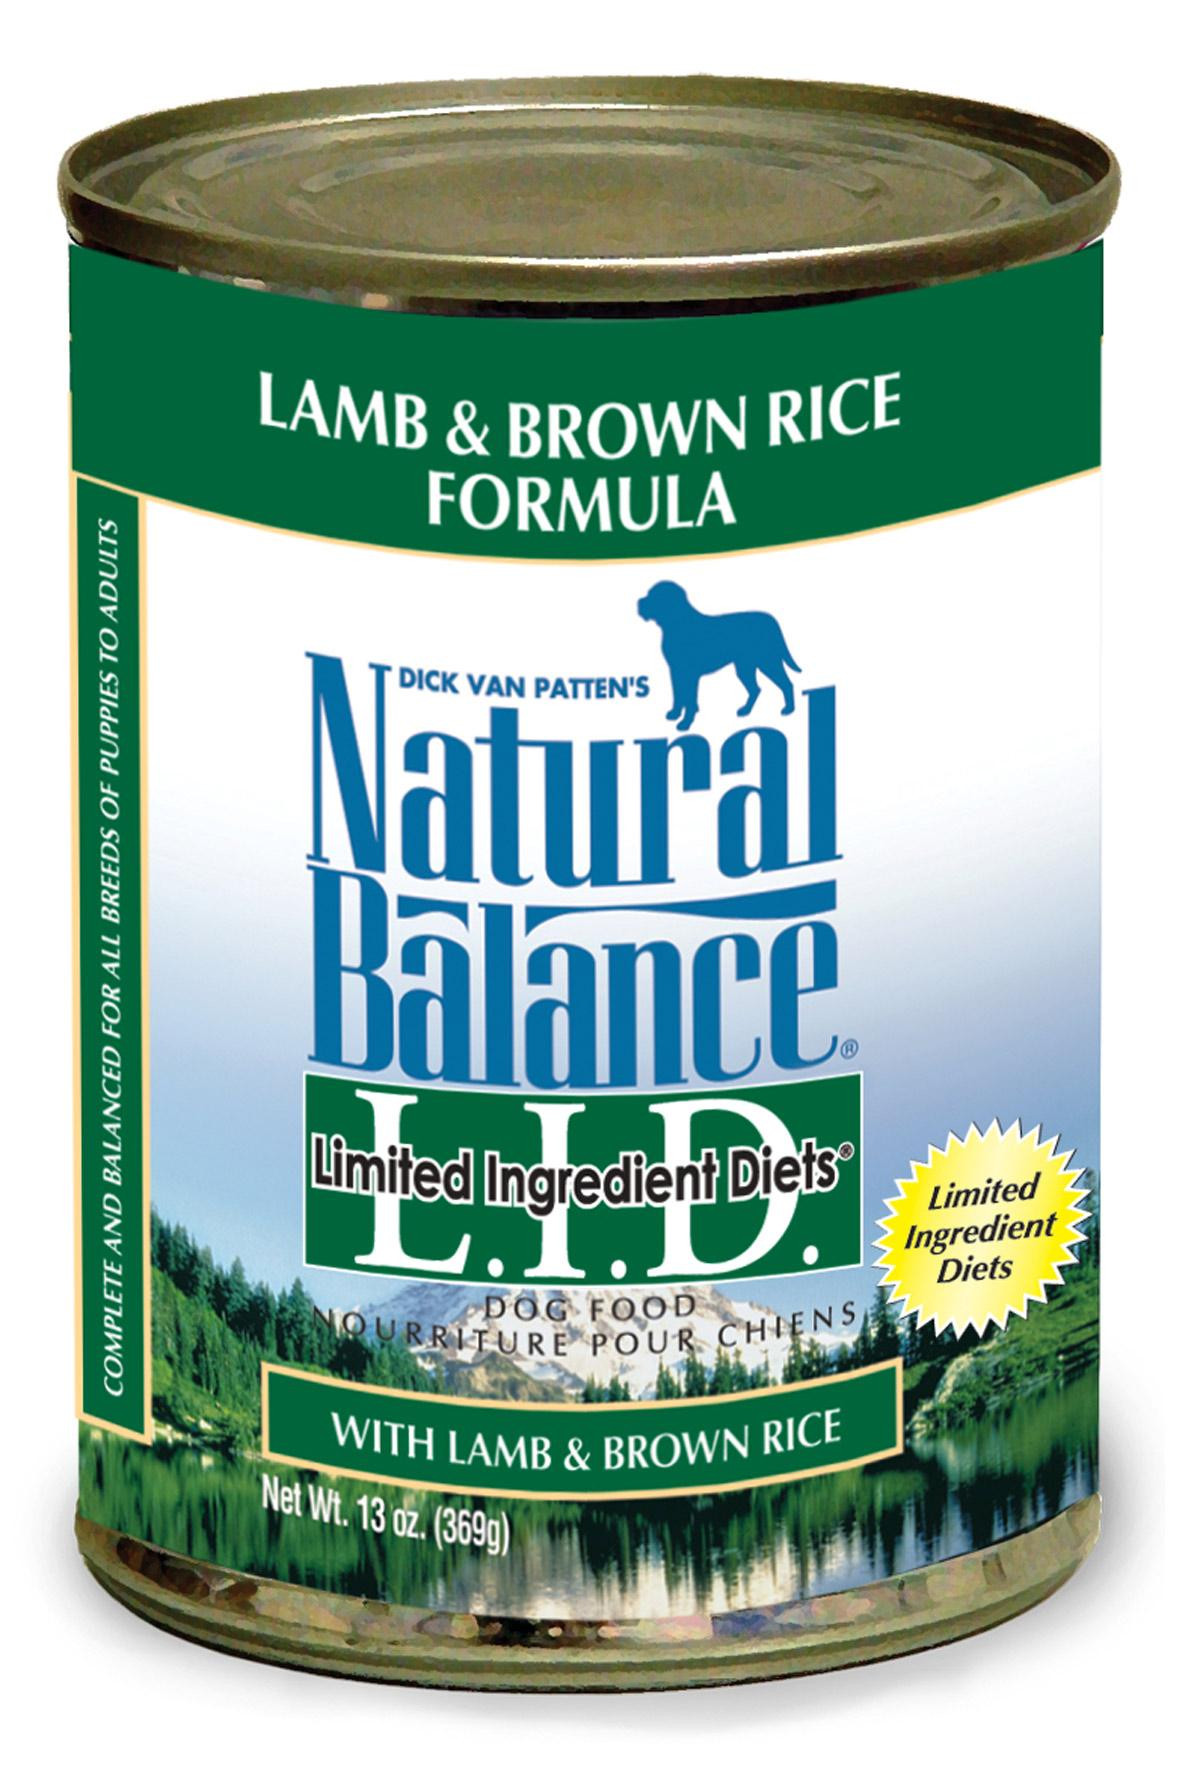 Pure Balance Lamb And Brown Rice
 Natural Balance Limited Ingre nt Diets Lamb and Brown